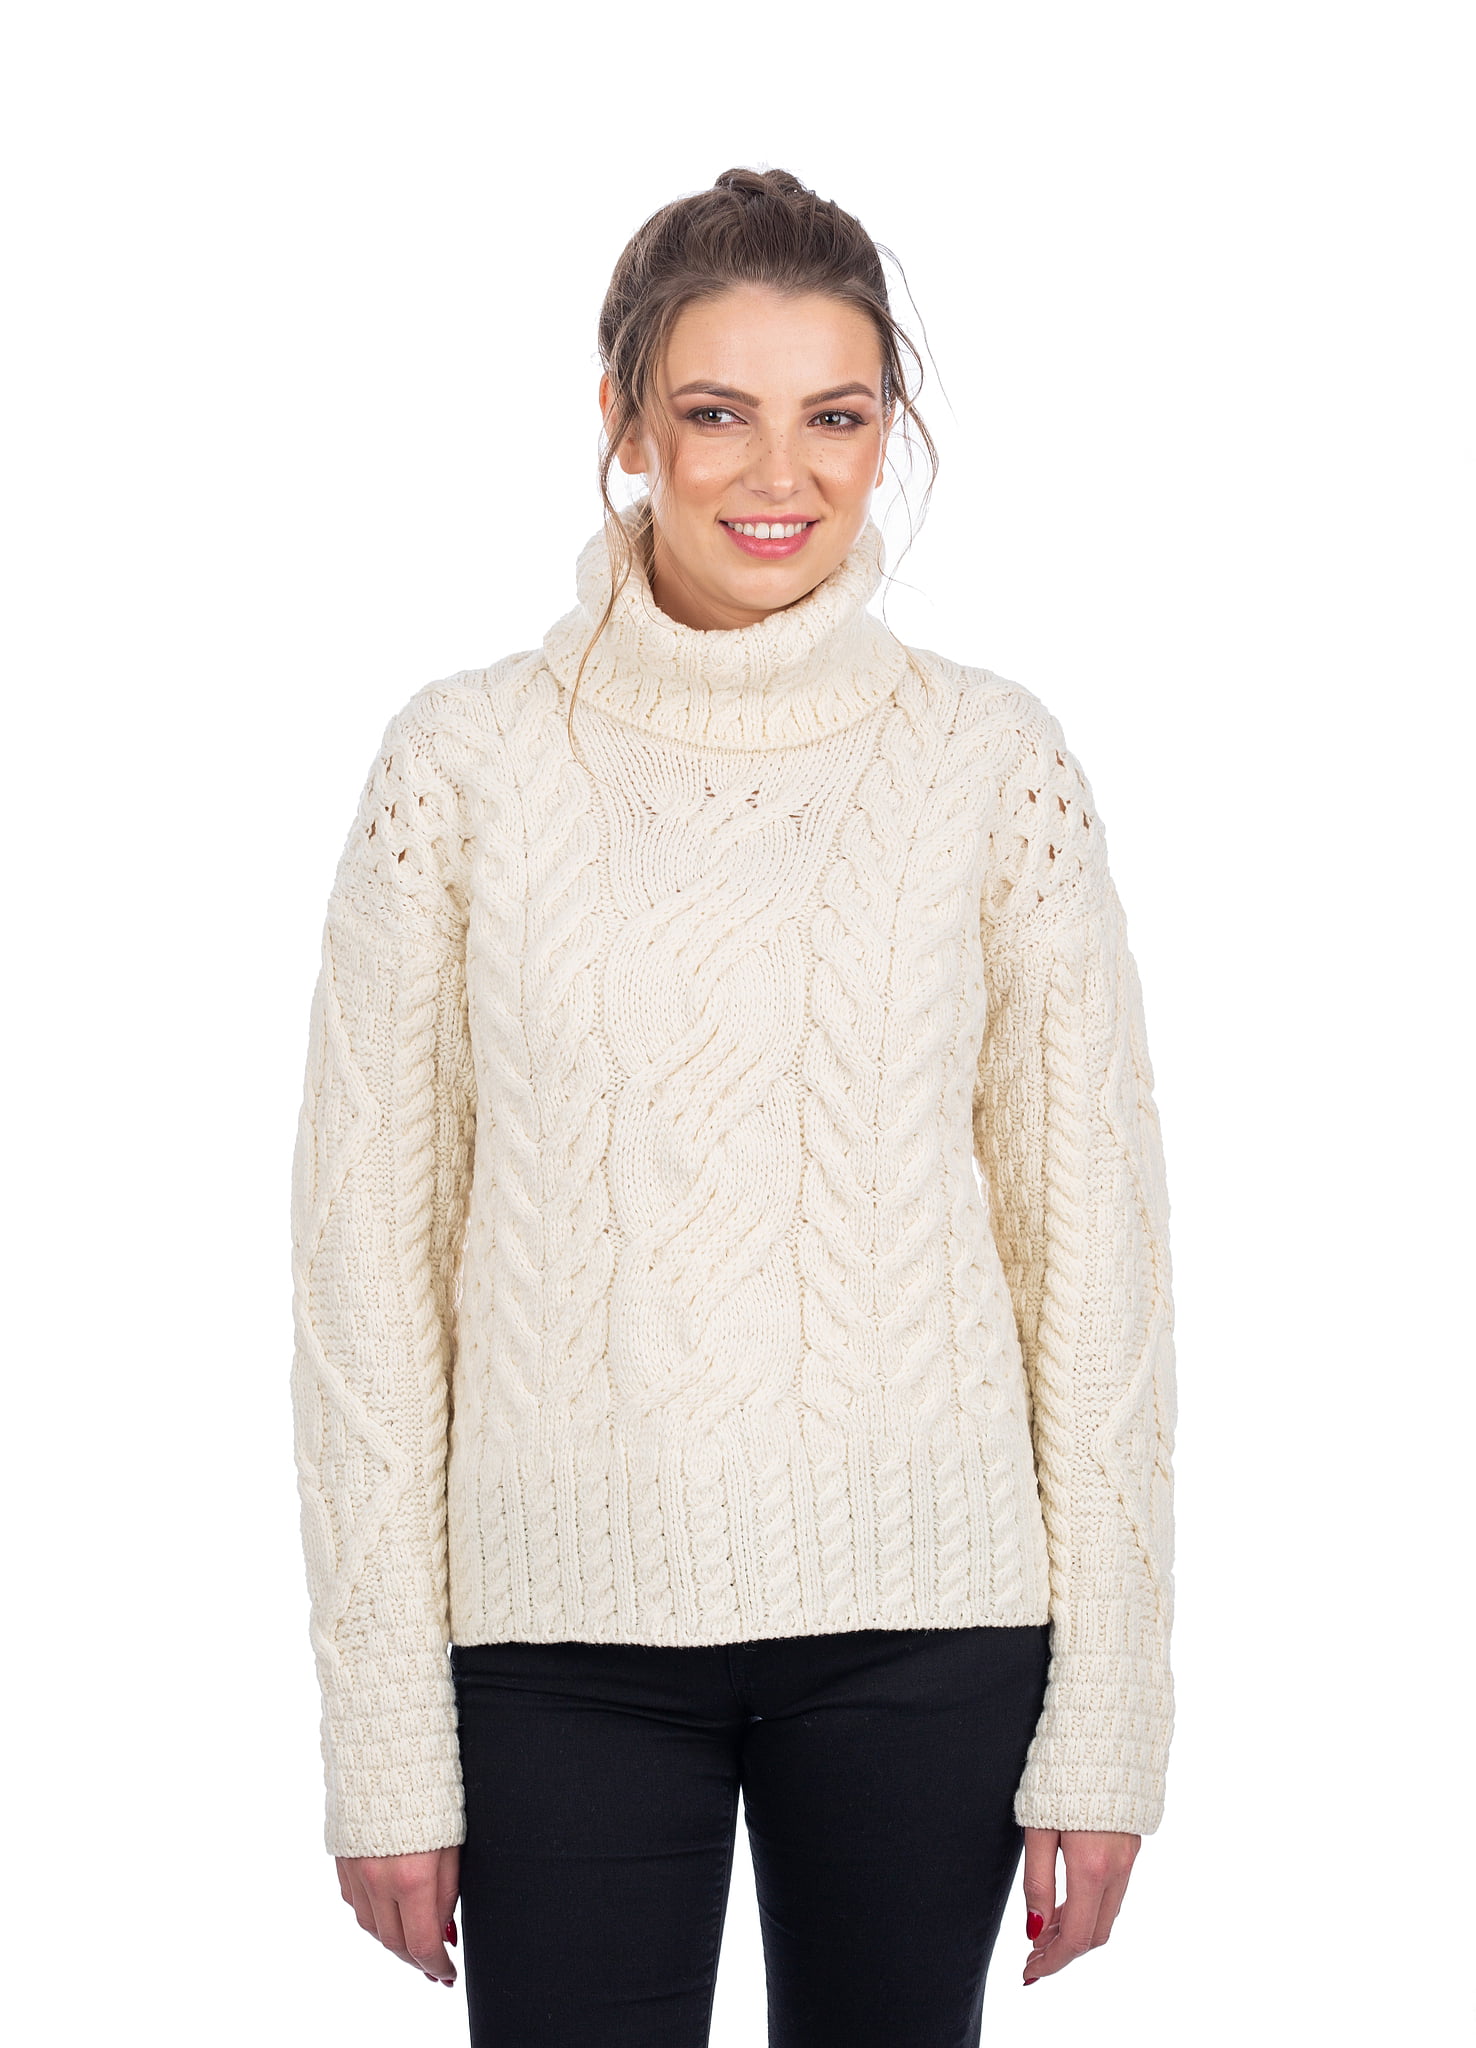 SAOL - Irish Sweater for Women 100% Super Soft Merino Wool Cable Knit ...